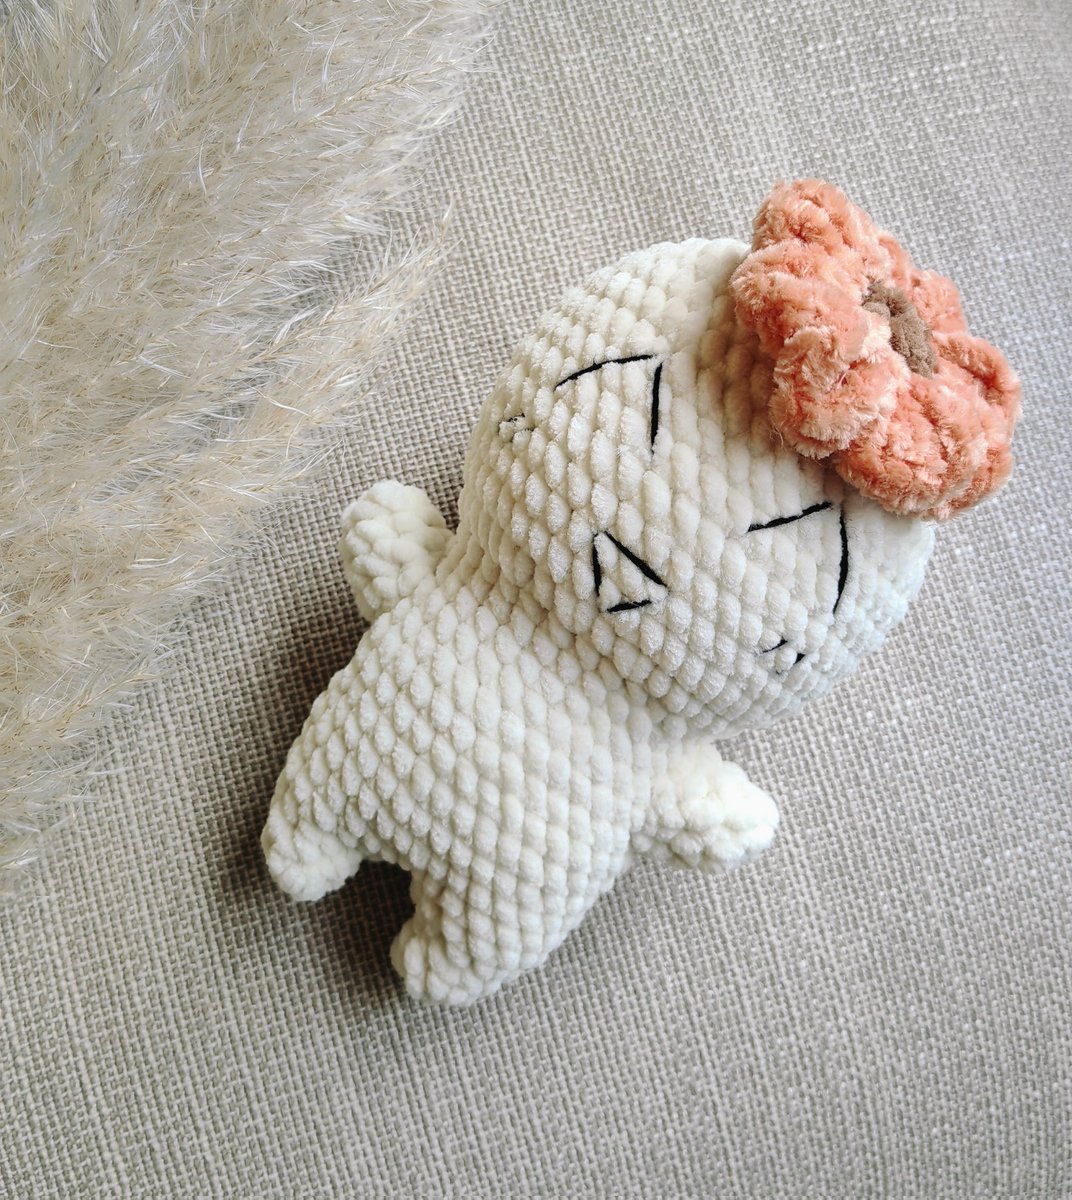 Another one photo with my cute flower😊🌼 
~~
#ATEEZ #ATEEZfanart #YEOSANG #kpopfanart #crochet #plushies #crochettoy